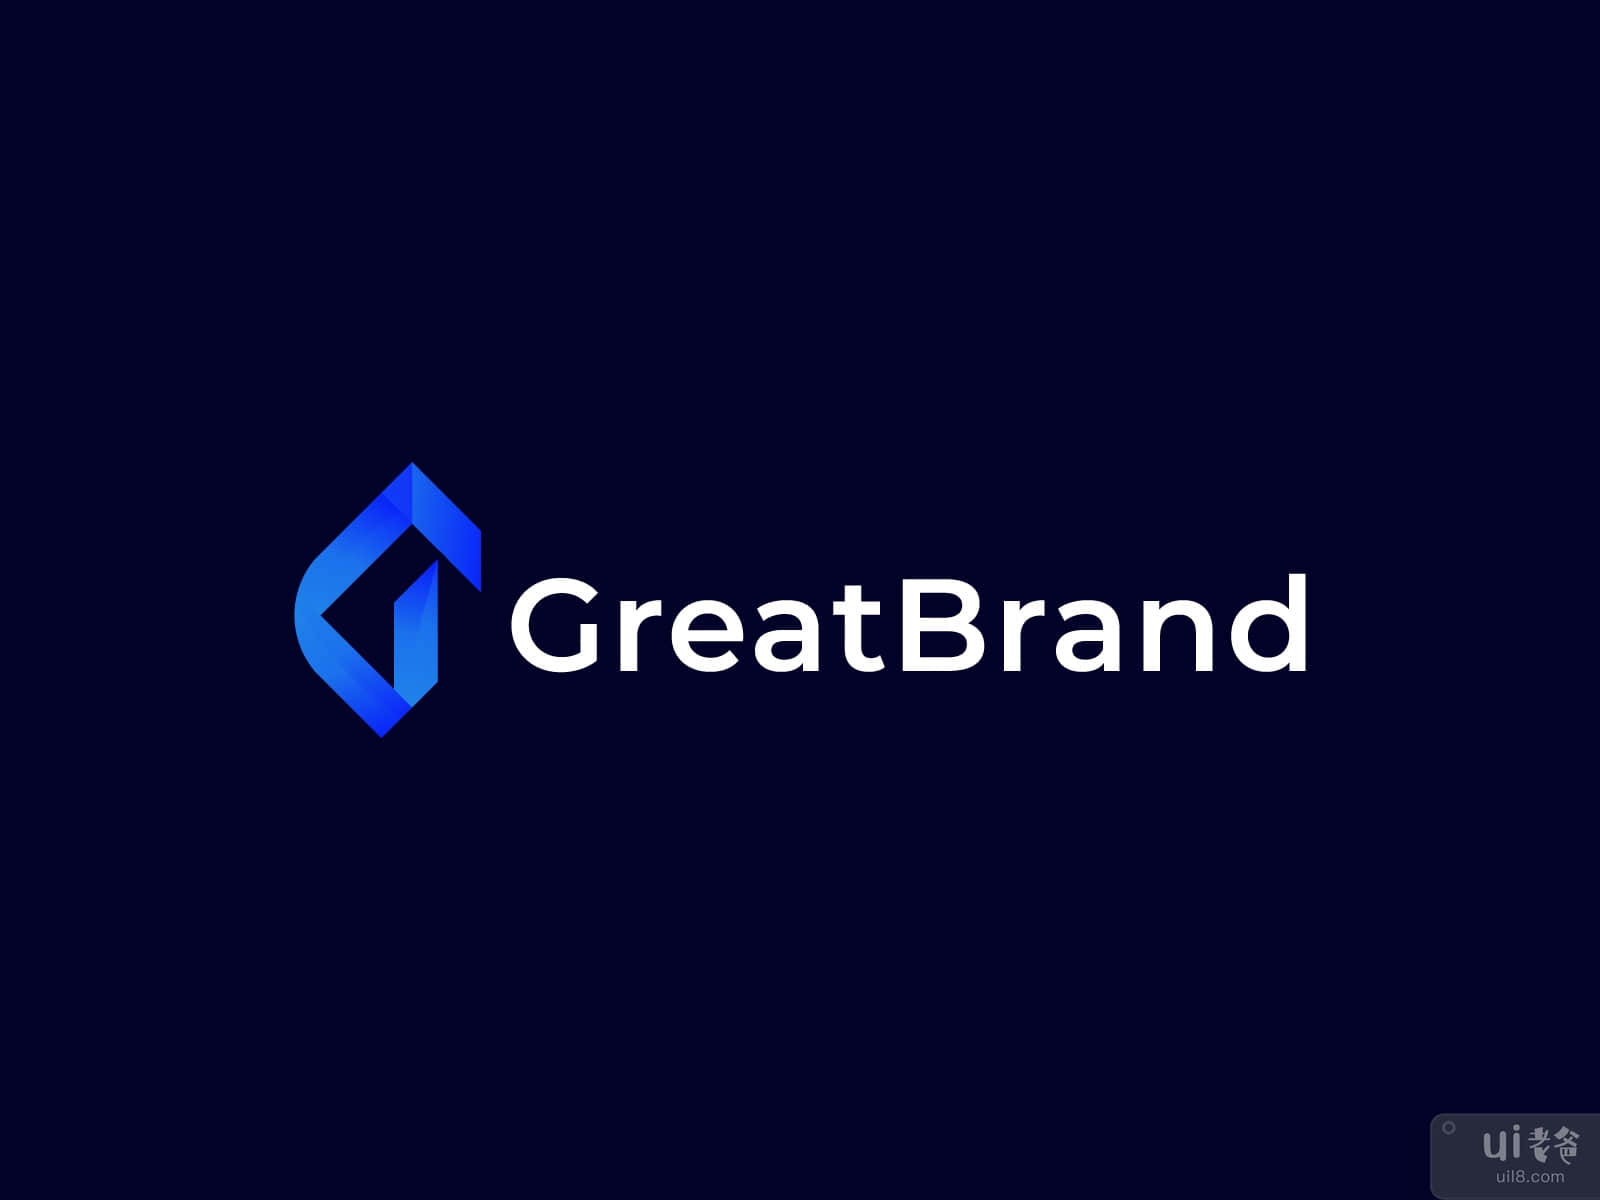 G modern logo design vector